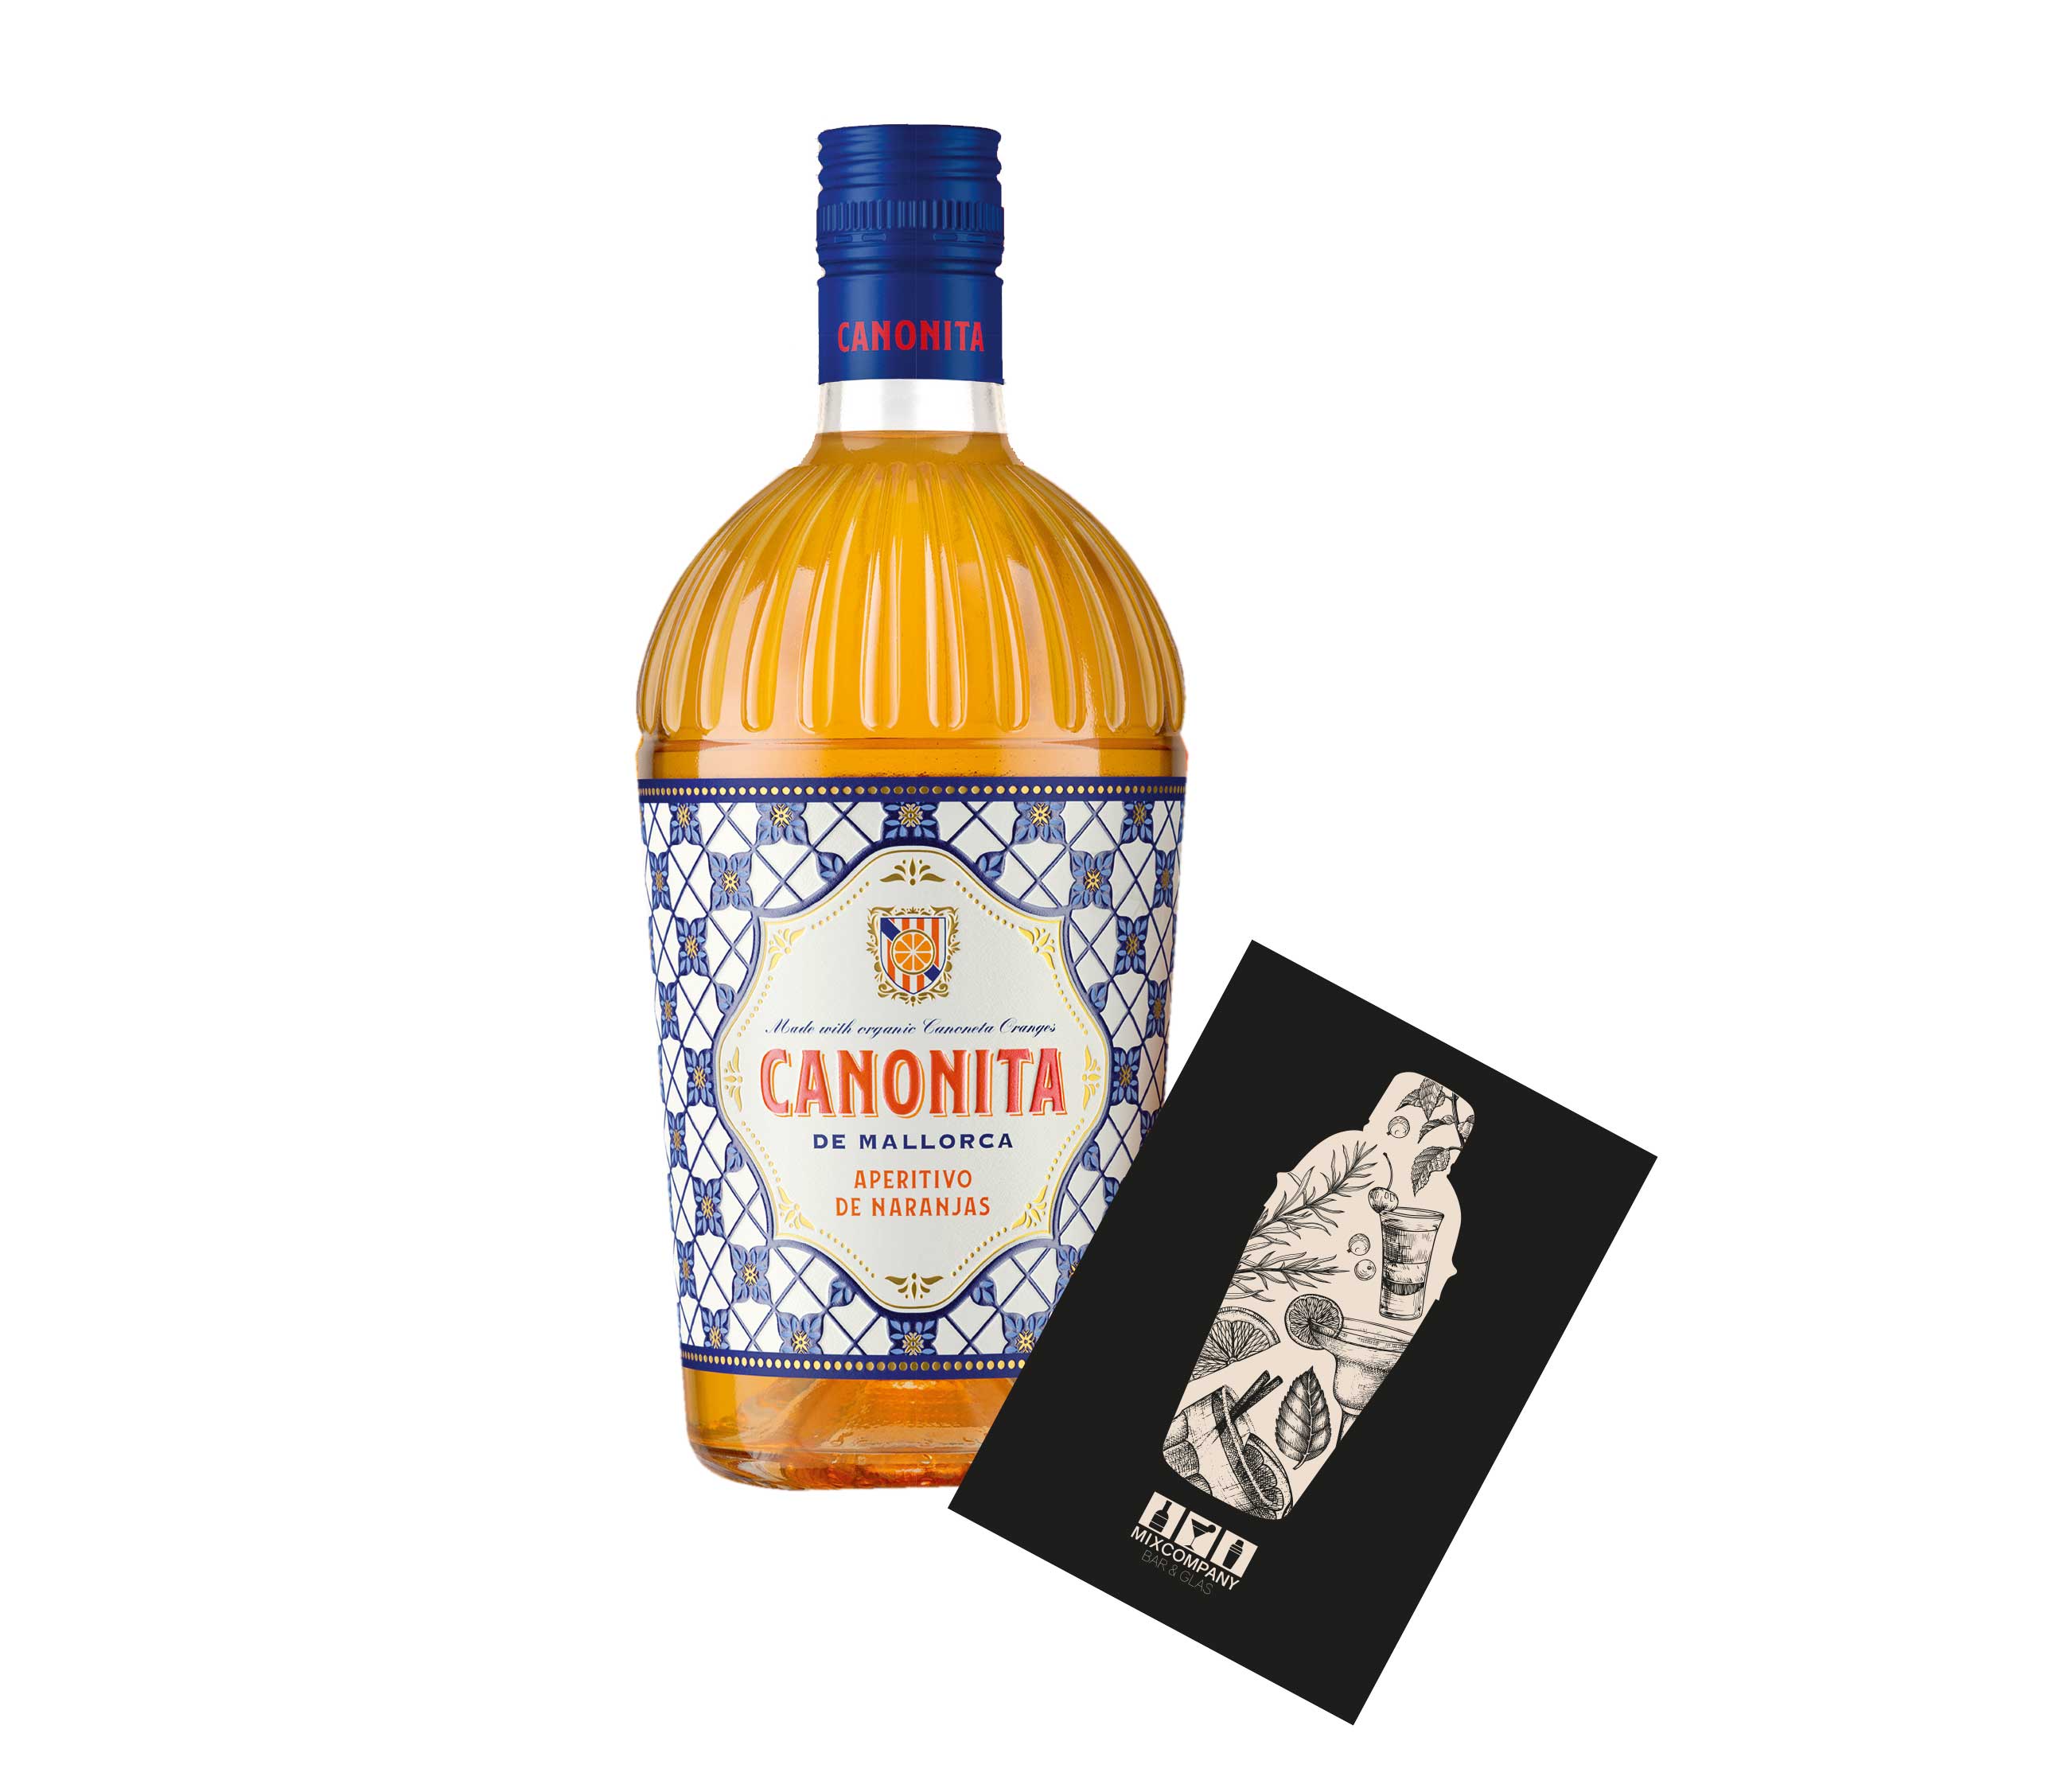 Canonita de Mallorca 0,75L (18% Vol) Aperitivo de Naranjas- [Enthält Sulfite]